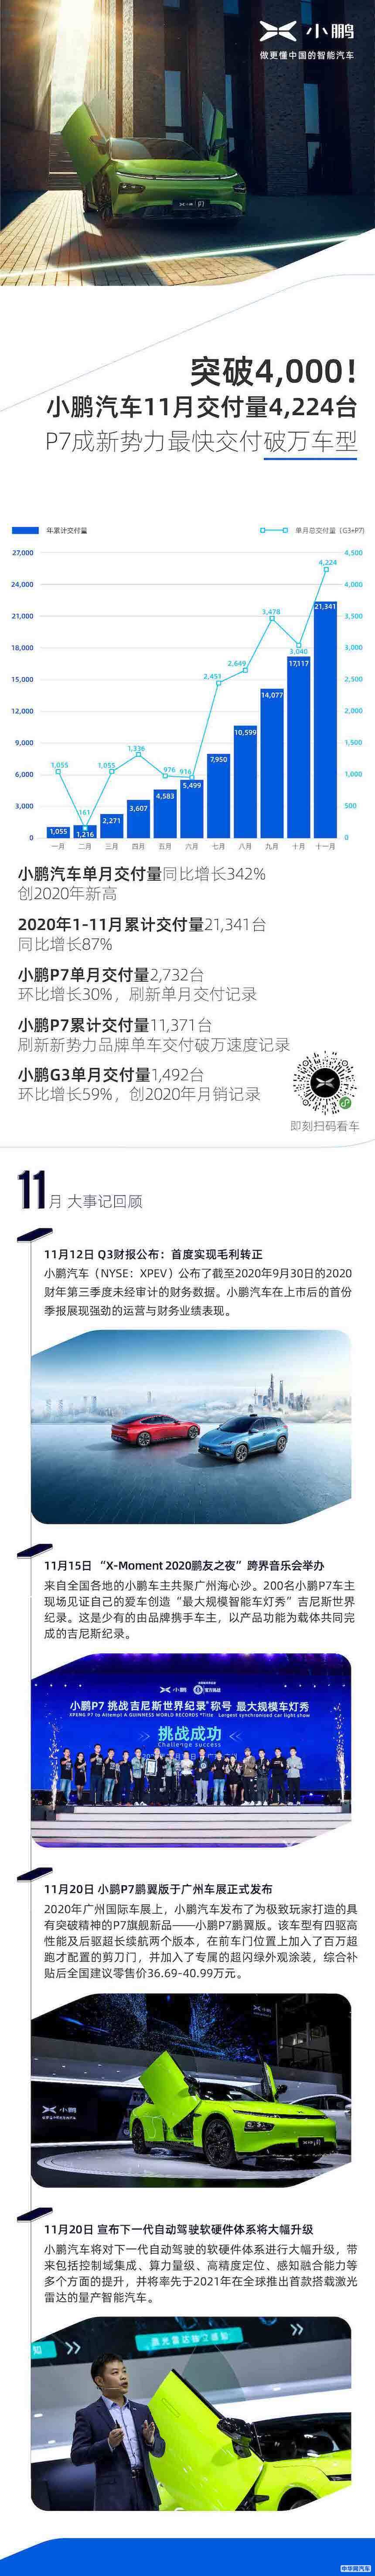 P7成最快交付破万车型 小鹏汽车11月交付量4,224台